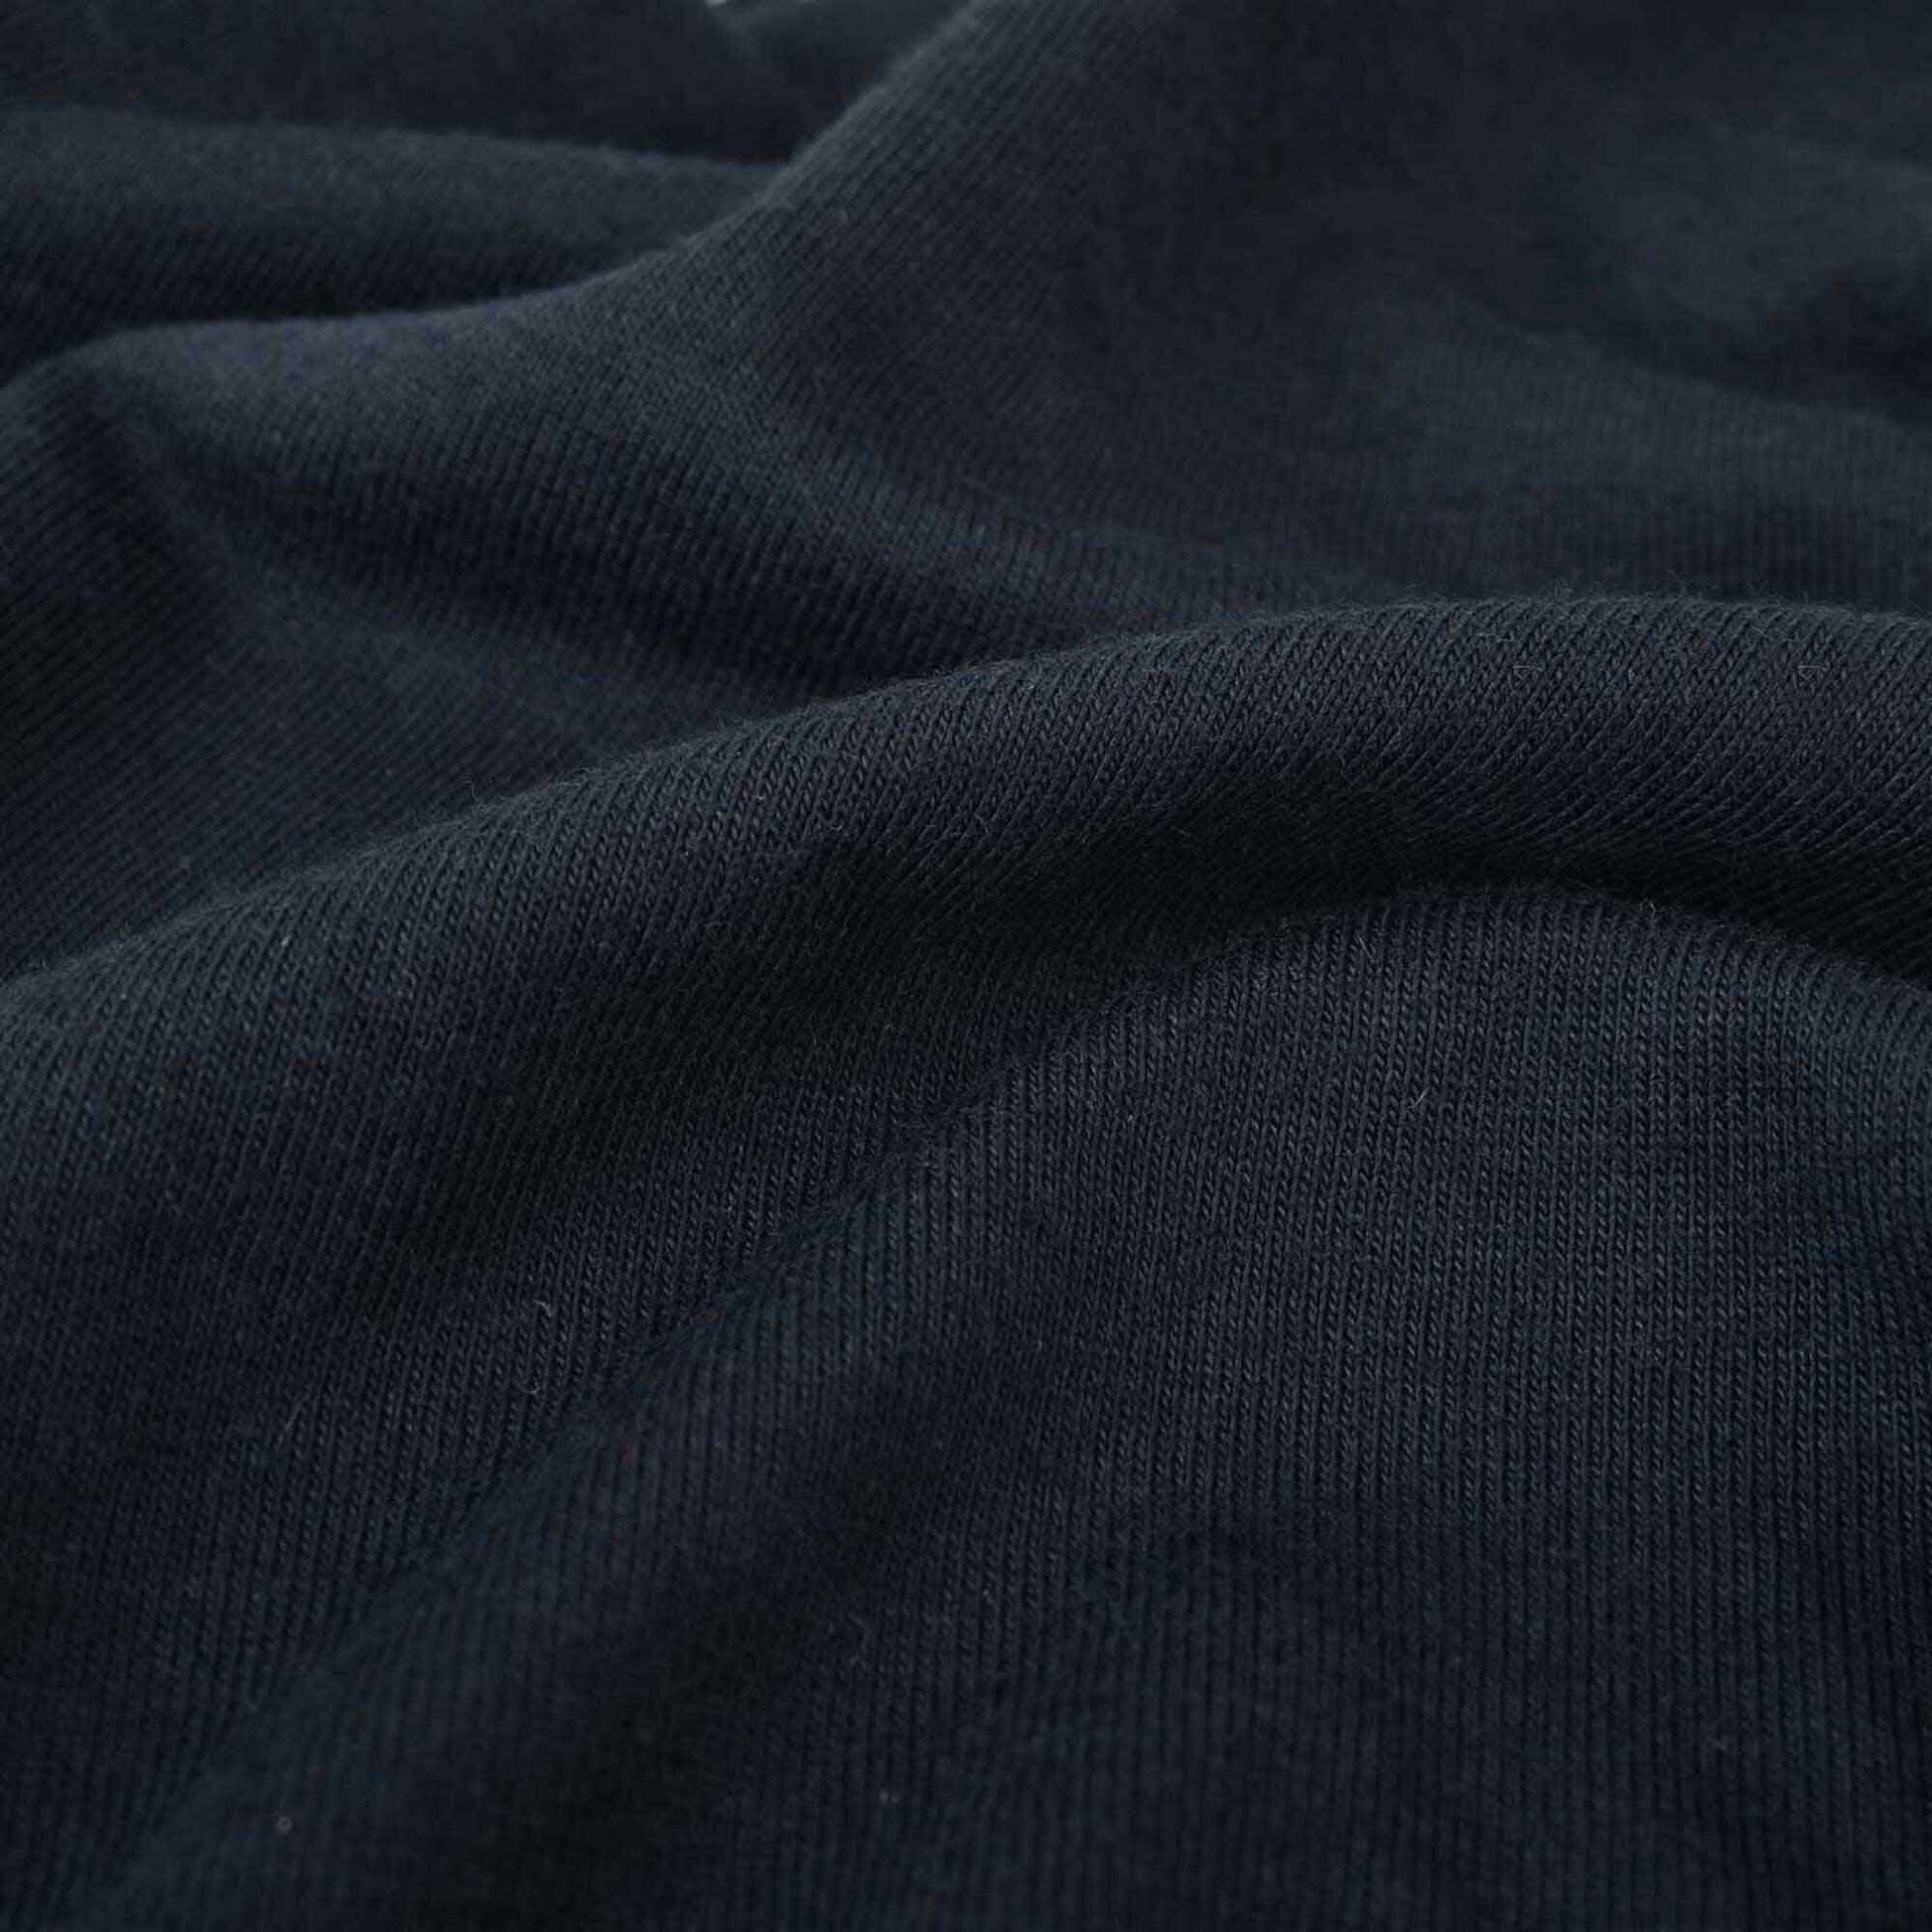 Polo Republica Men's Brooklyn Printed Short Sleeve tee shirt Men's Tee Shirt Polo Republica 